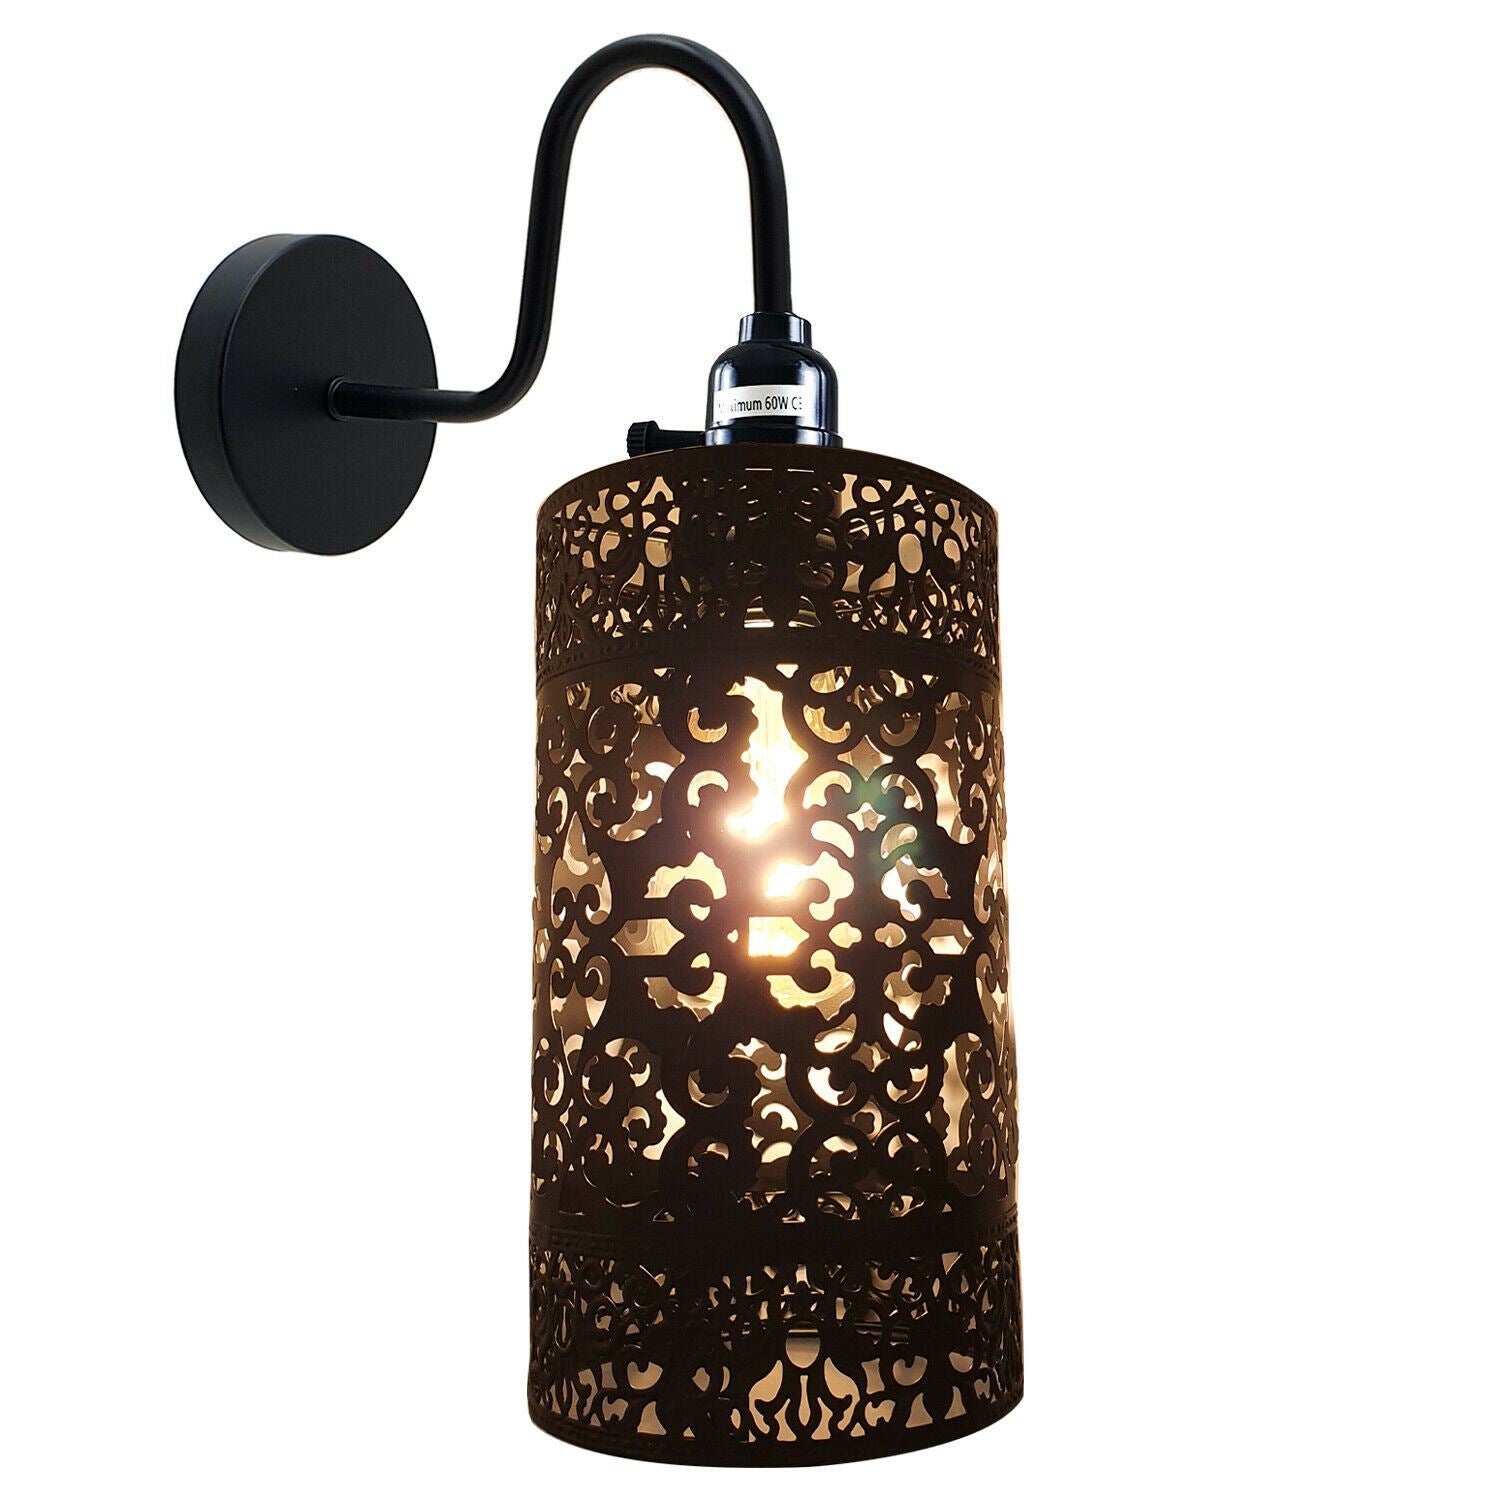 Vintage Industrial Wall Lights Fittings Indoor Sconce Black Metal Home Office Lamp Shade~1204 - LEDSone UK Ltd